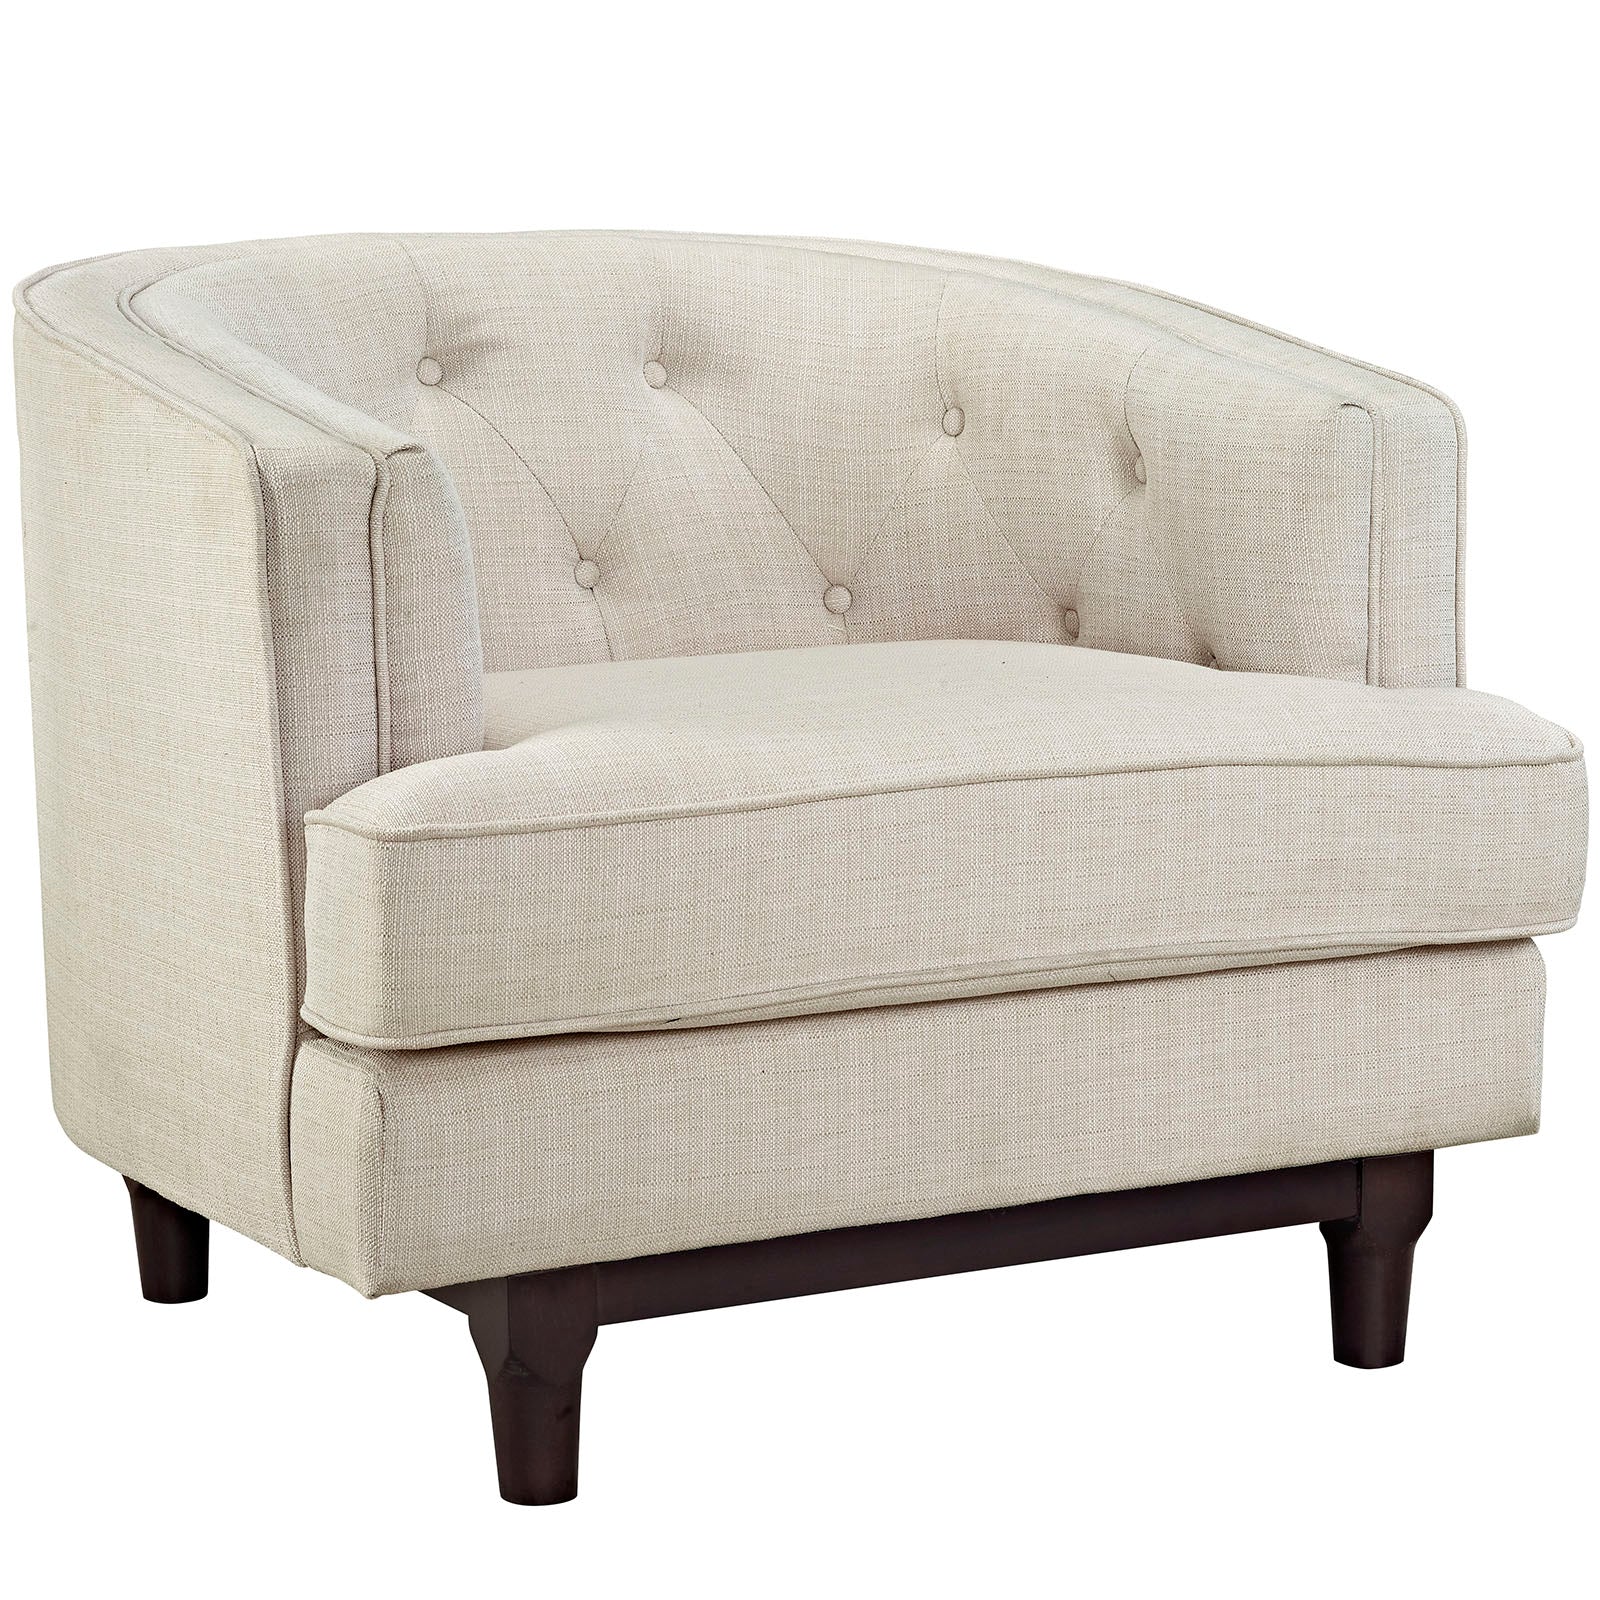 Coast Upholstered Fabric Armchair - East Shore Modern Home Furnishings